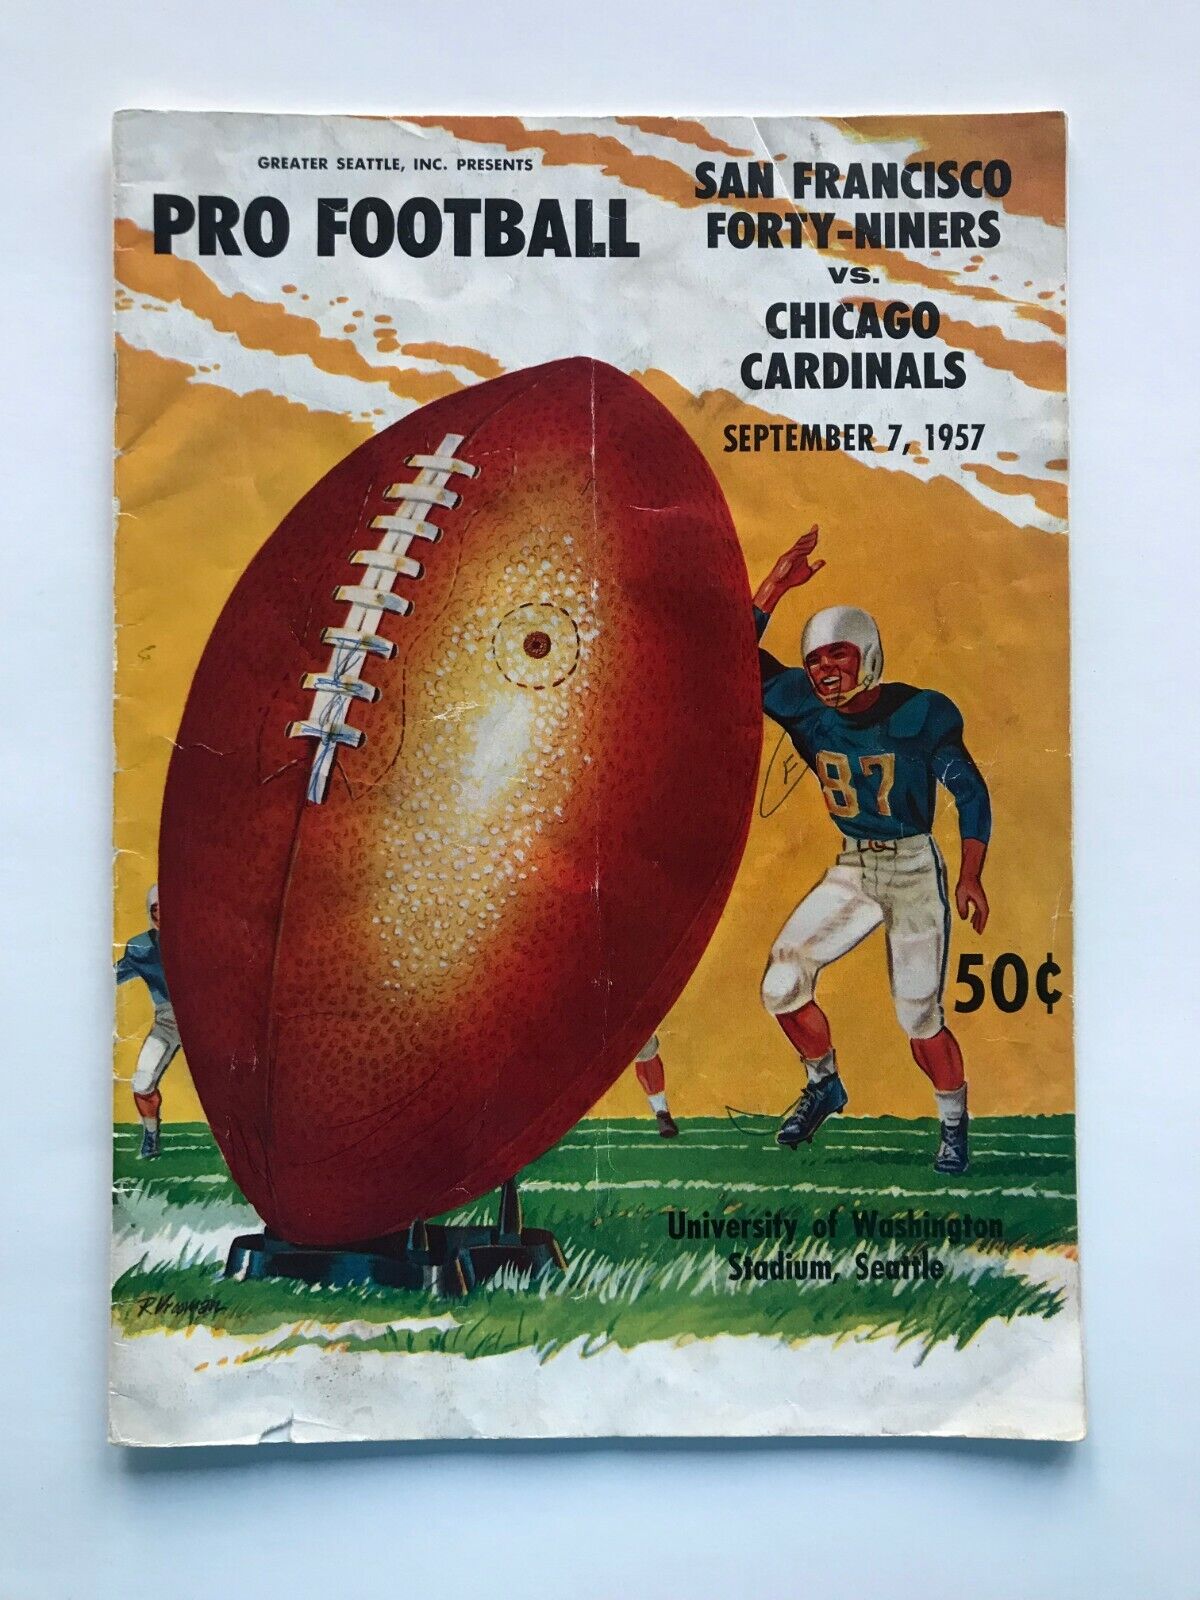 1957 NFL Exhibition game program (San Francisco 49ers vs Chicago